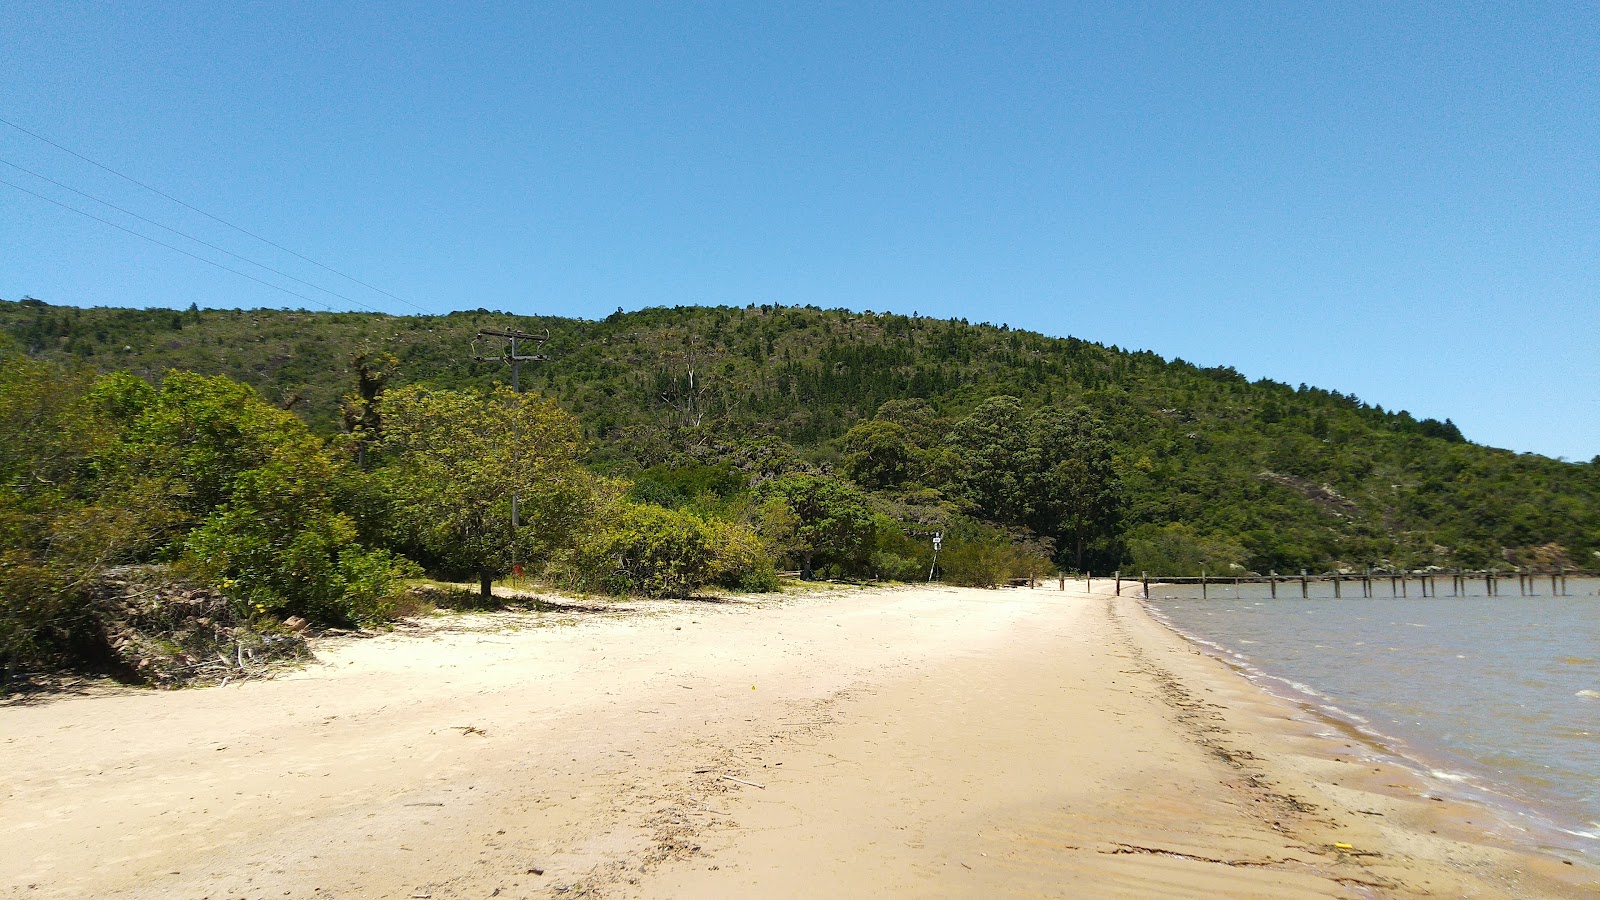 Photo of Praia da Pedreira with turquoise water surface